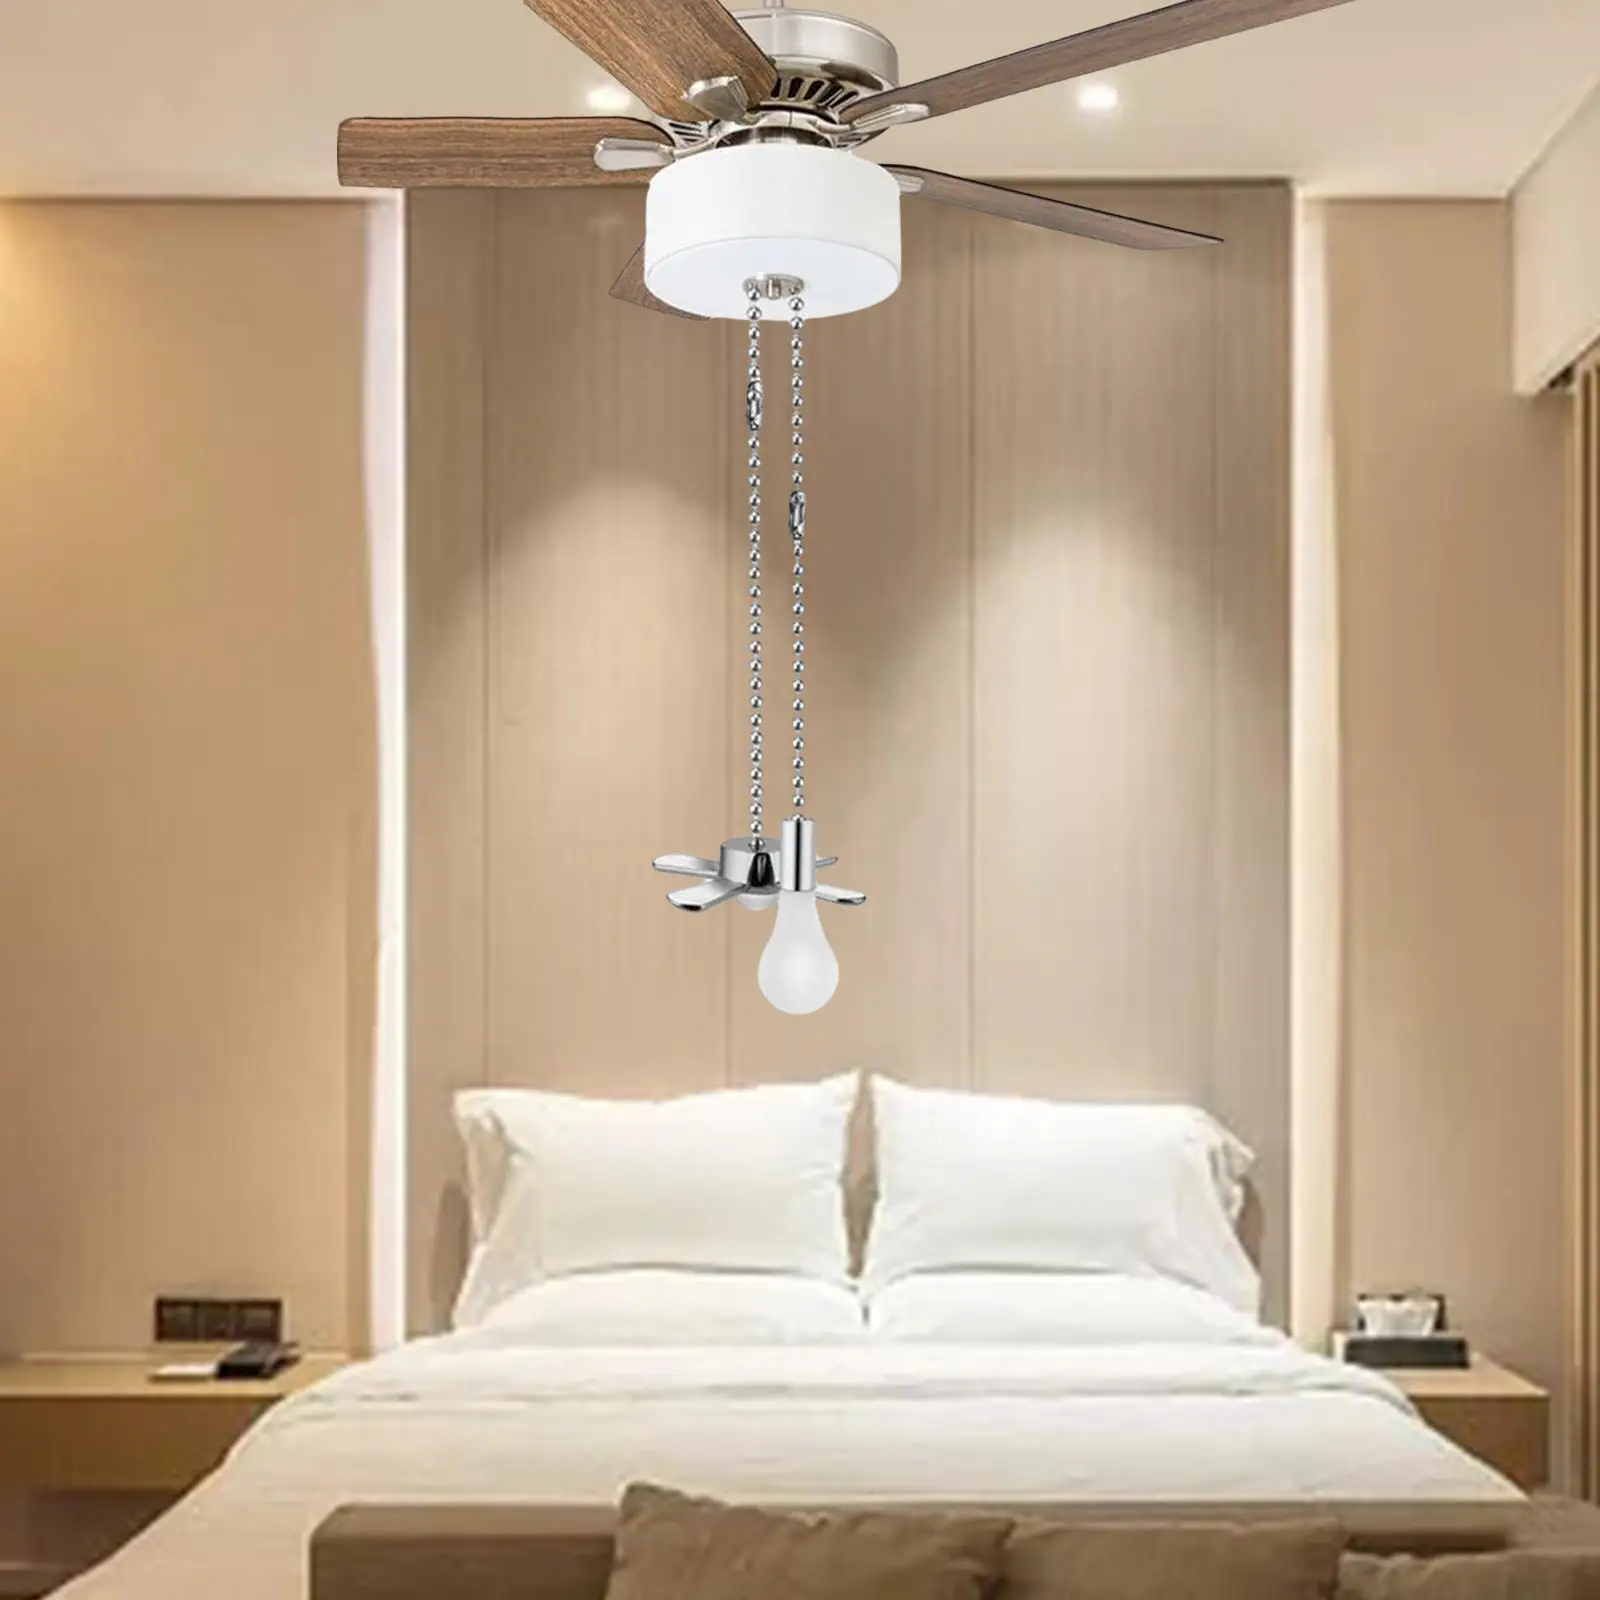 Ceiling Fan Pull Chains Lamp Chain Extender Decor Retro Style Pendant Ornaments Accessories Chandelier Lighting Zipper Extension